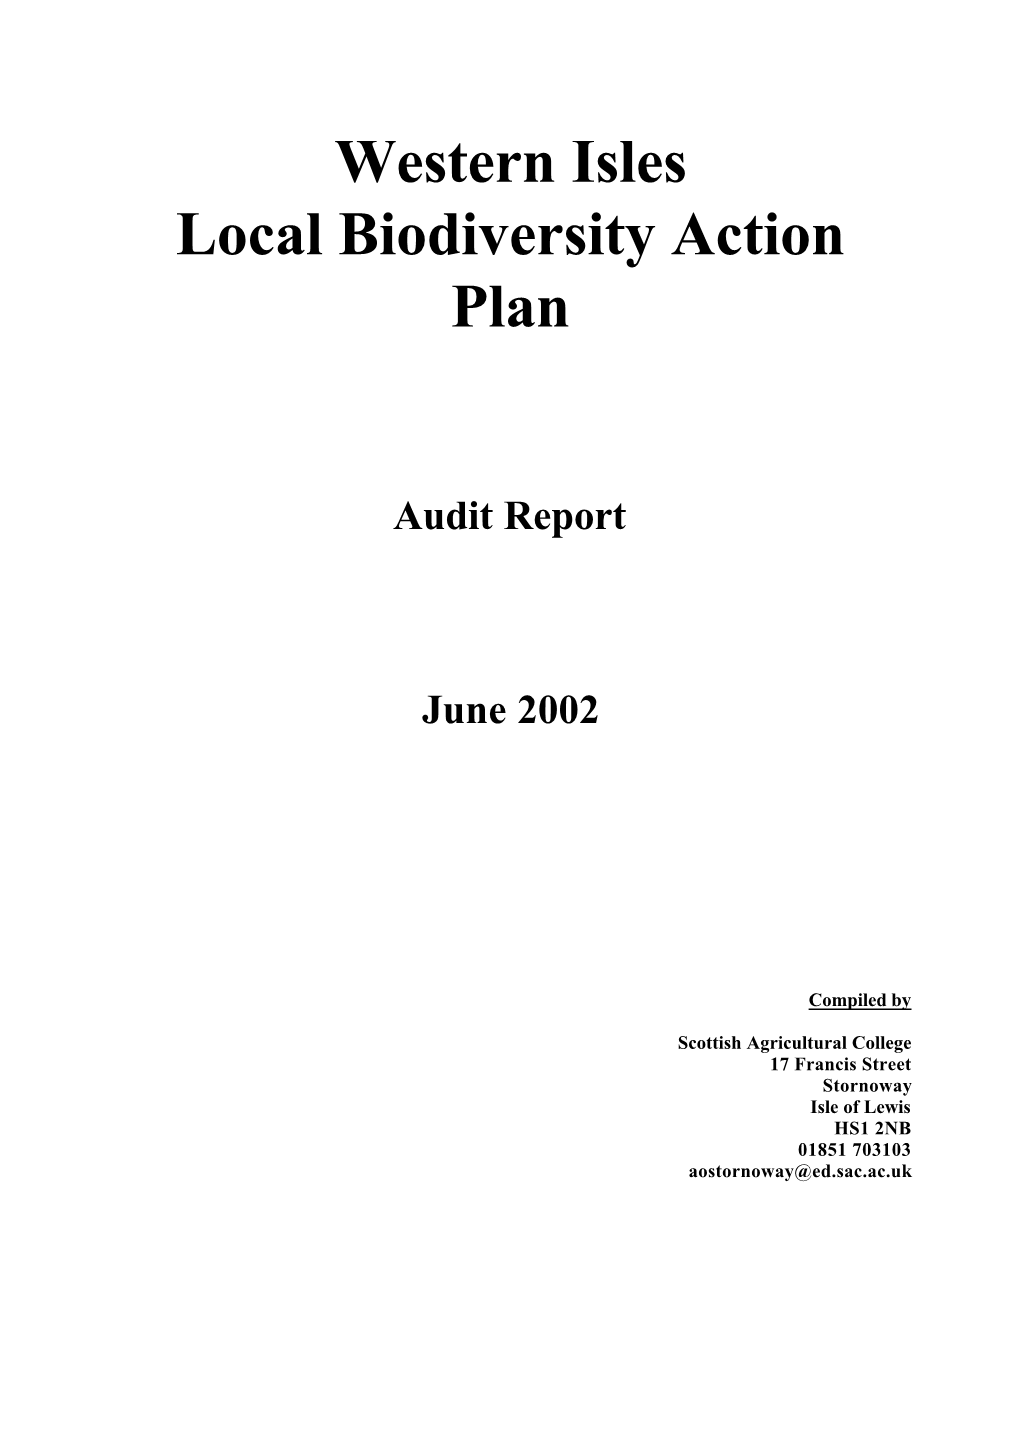 Western Isles Local Biodiversity Action Plan